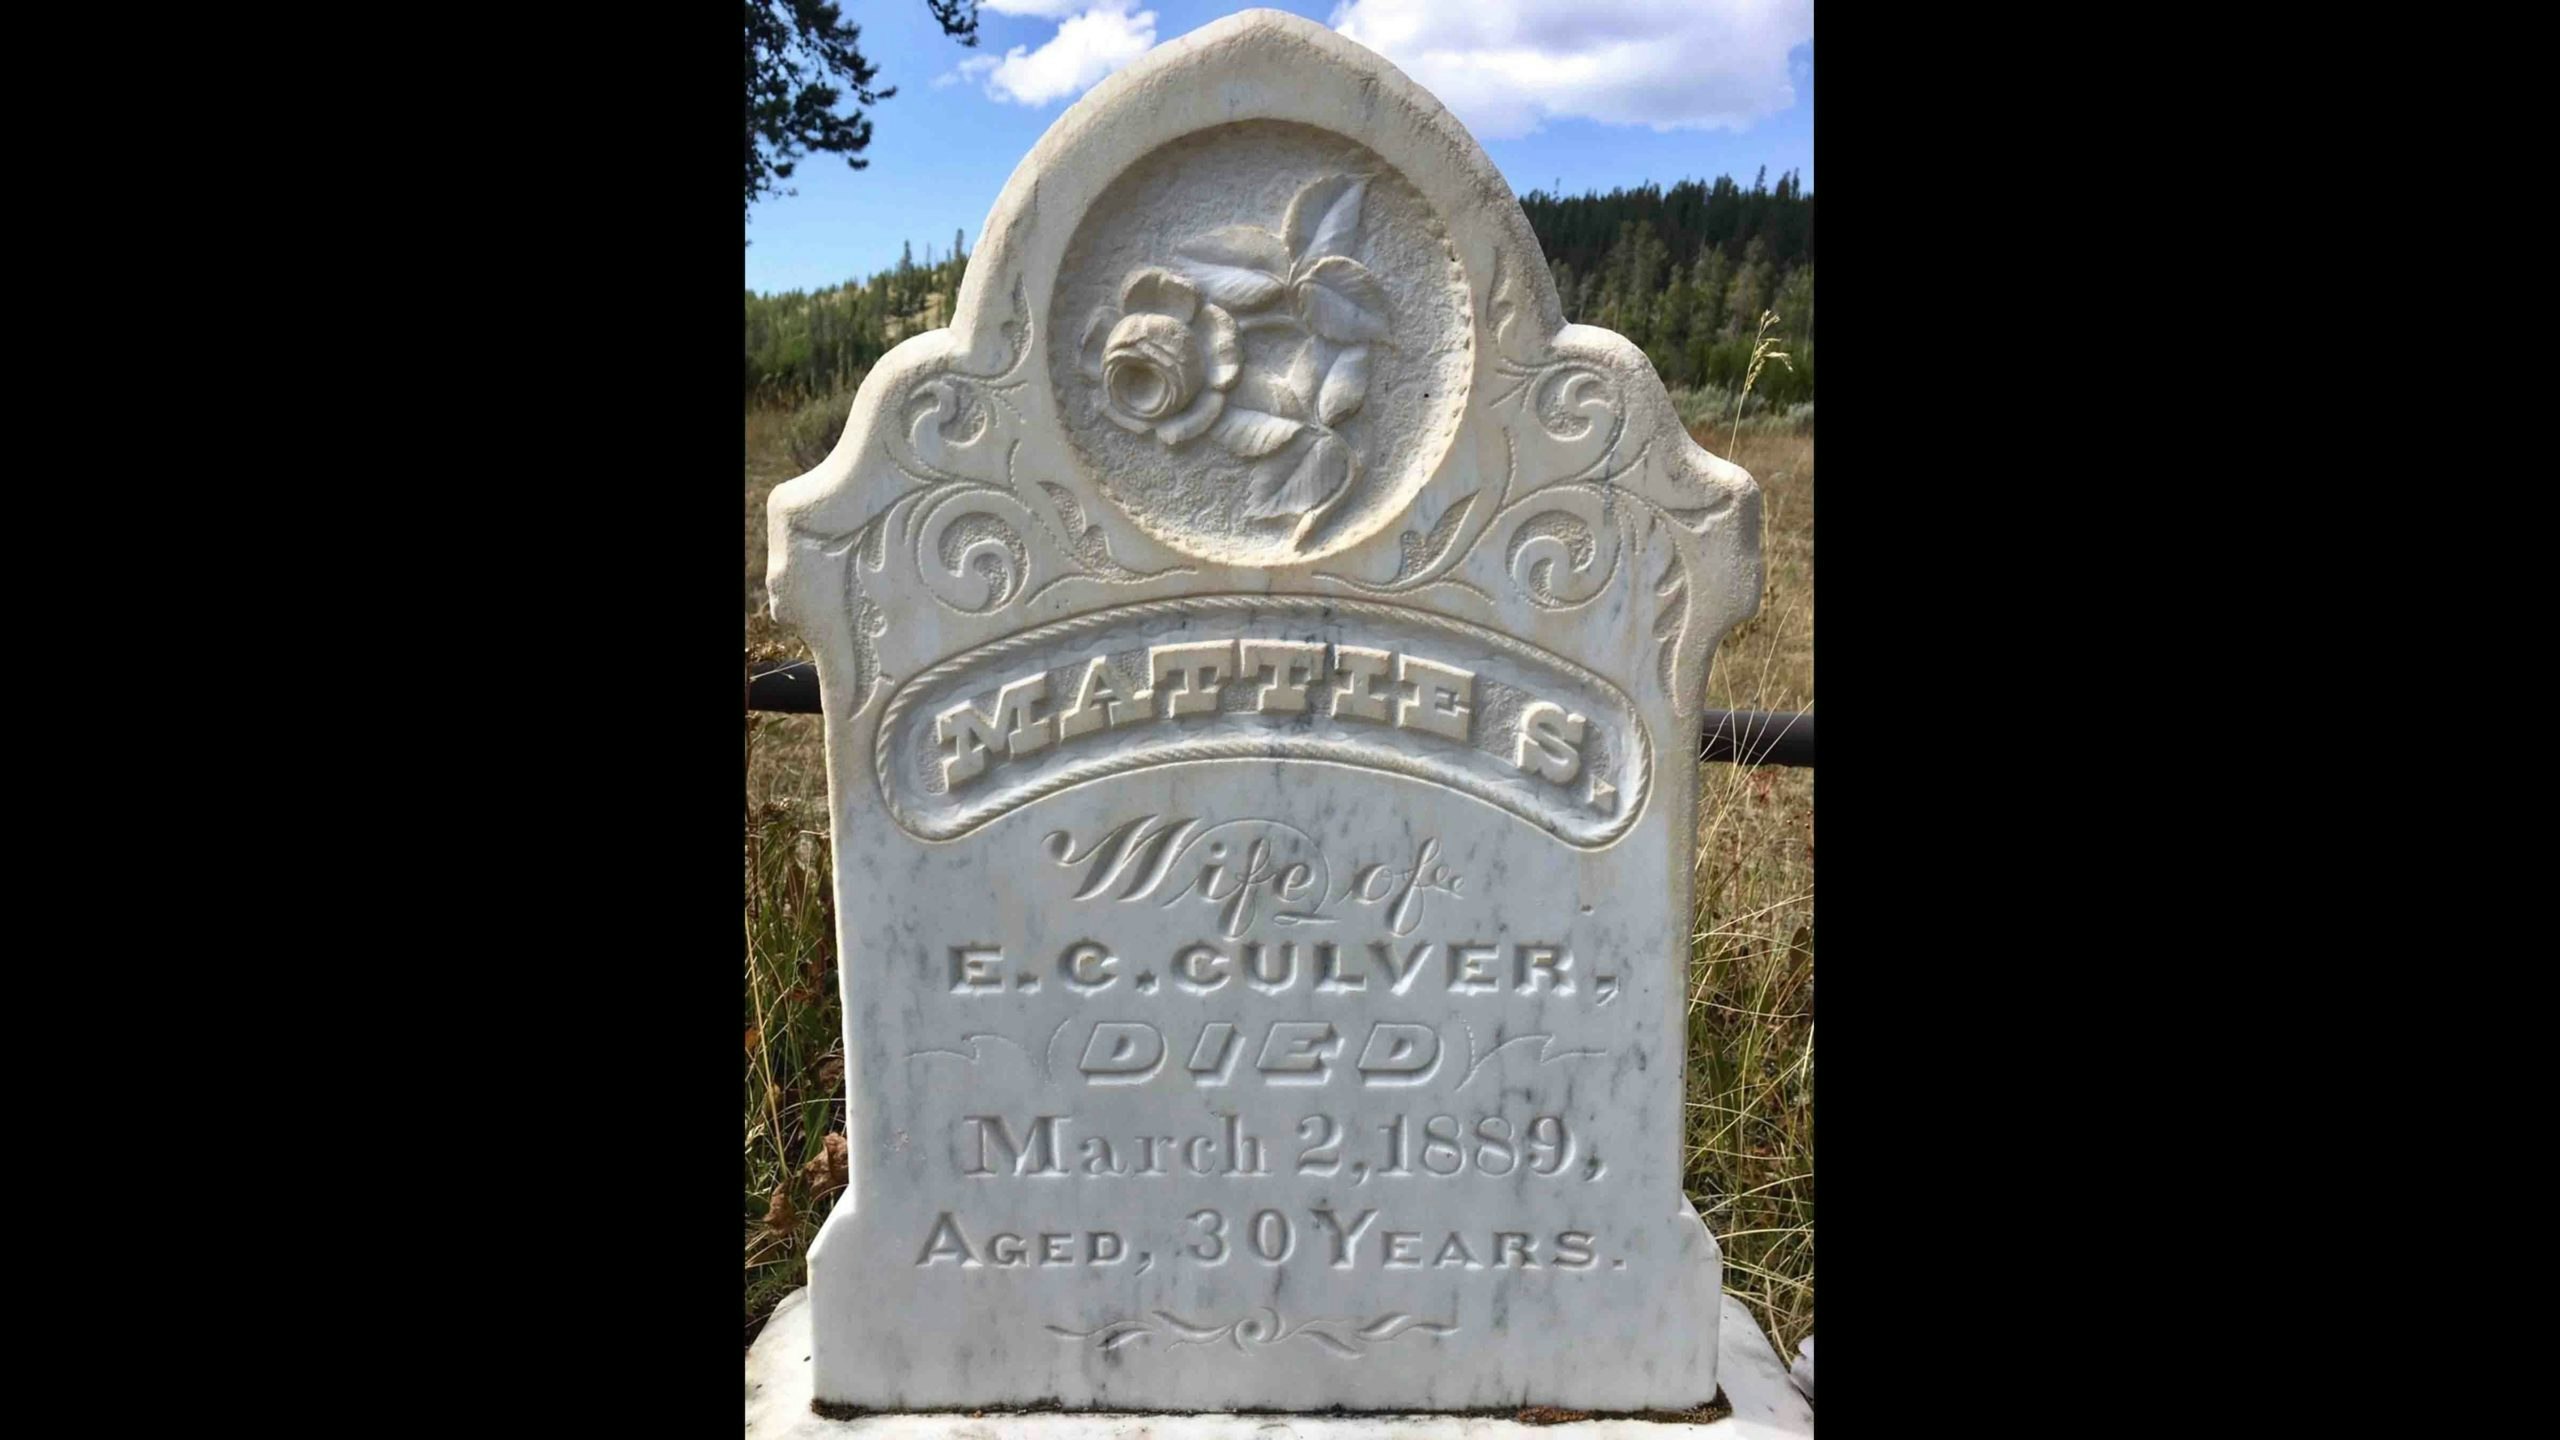 Matties grave 2 10 19 22 scaled